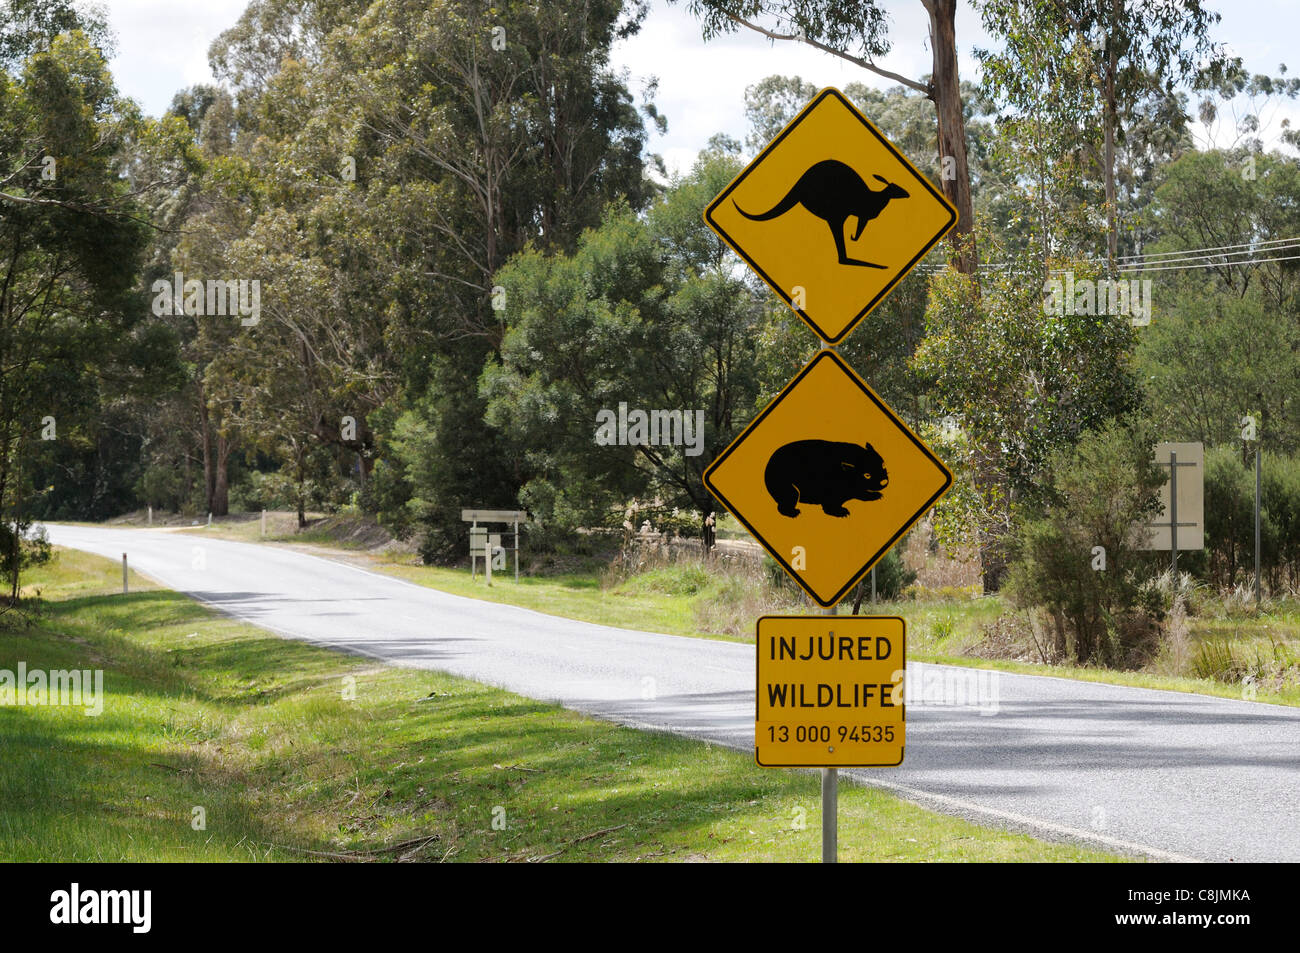 Kangaroo and Wombat road sign Photographed in Victoria, Australia Stock Photo